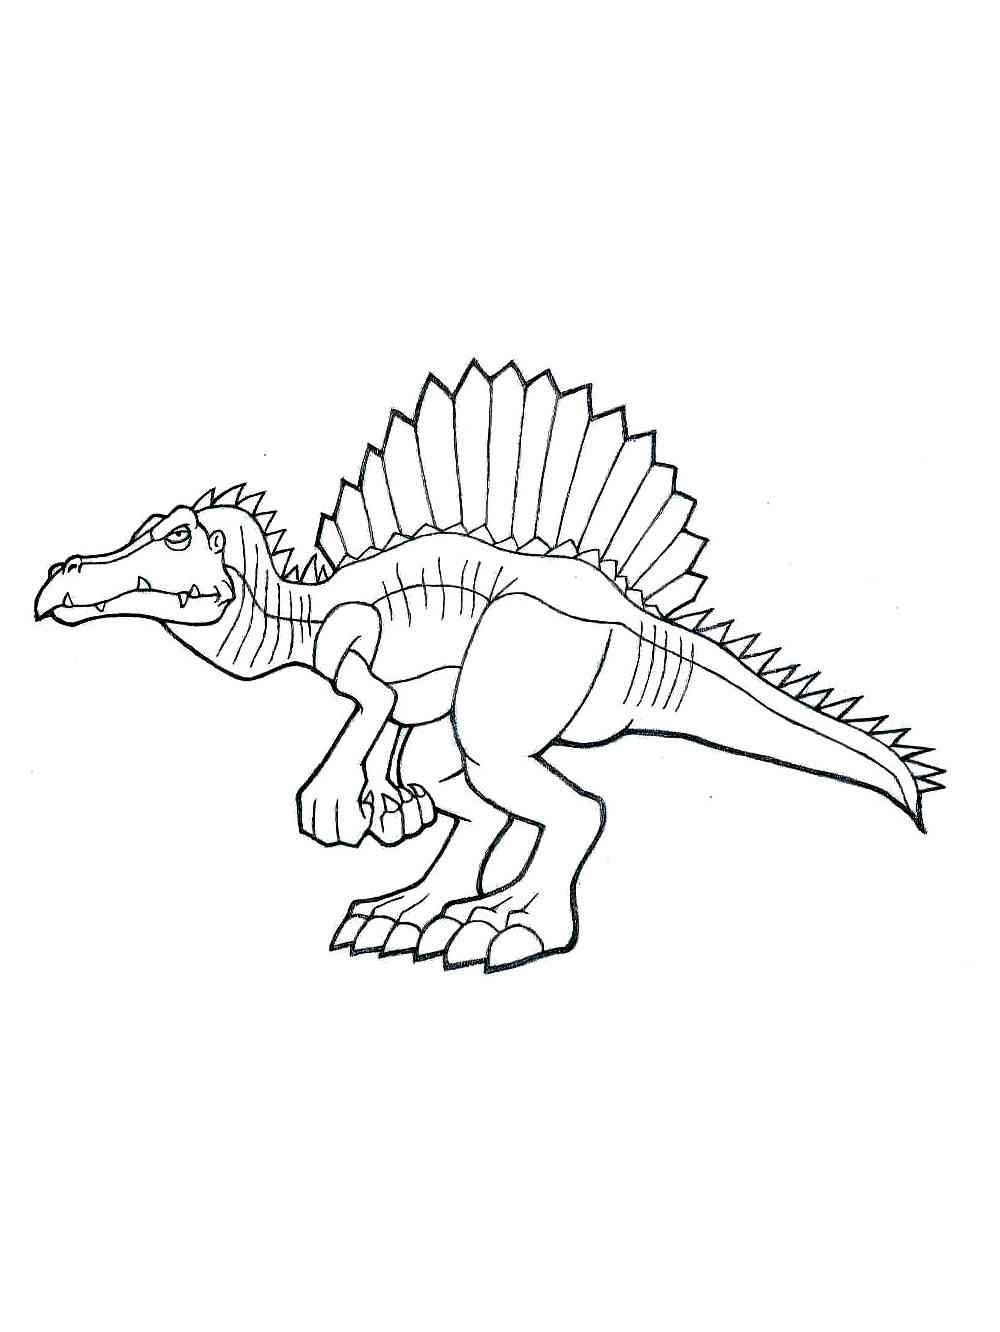 Spinosaurus Dino coloring page